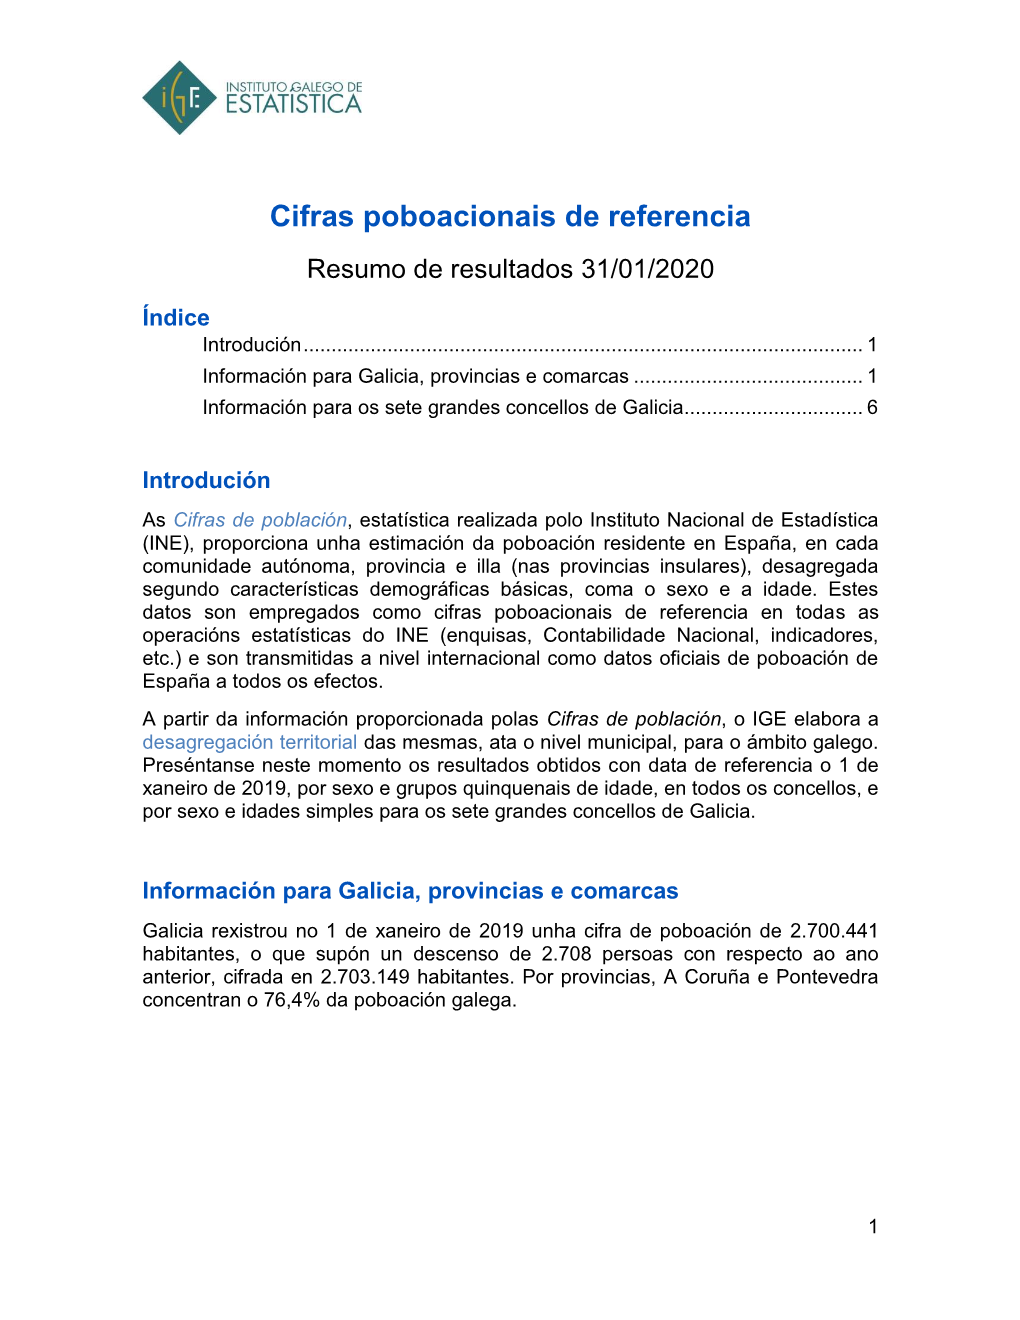 Cifras Poboacionais De Referencia Resumo De Resultados 31/01/2020